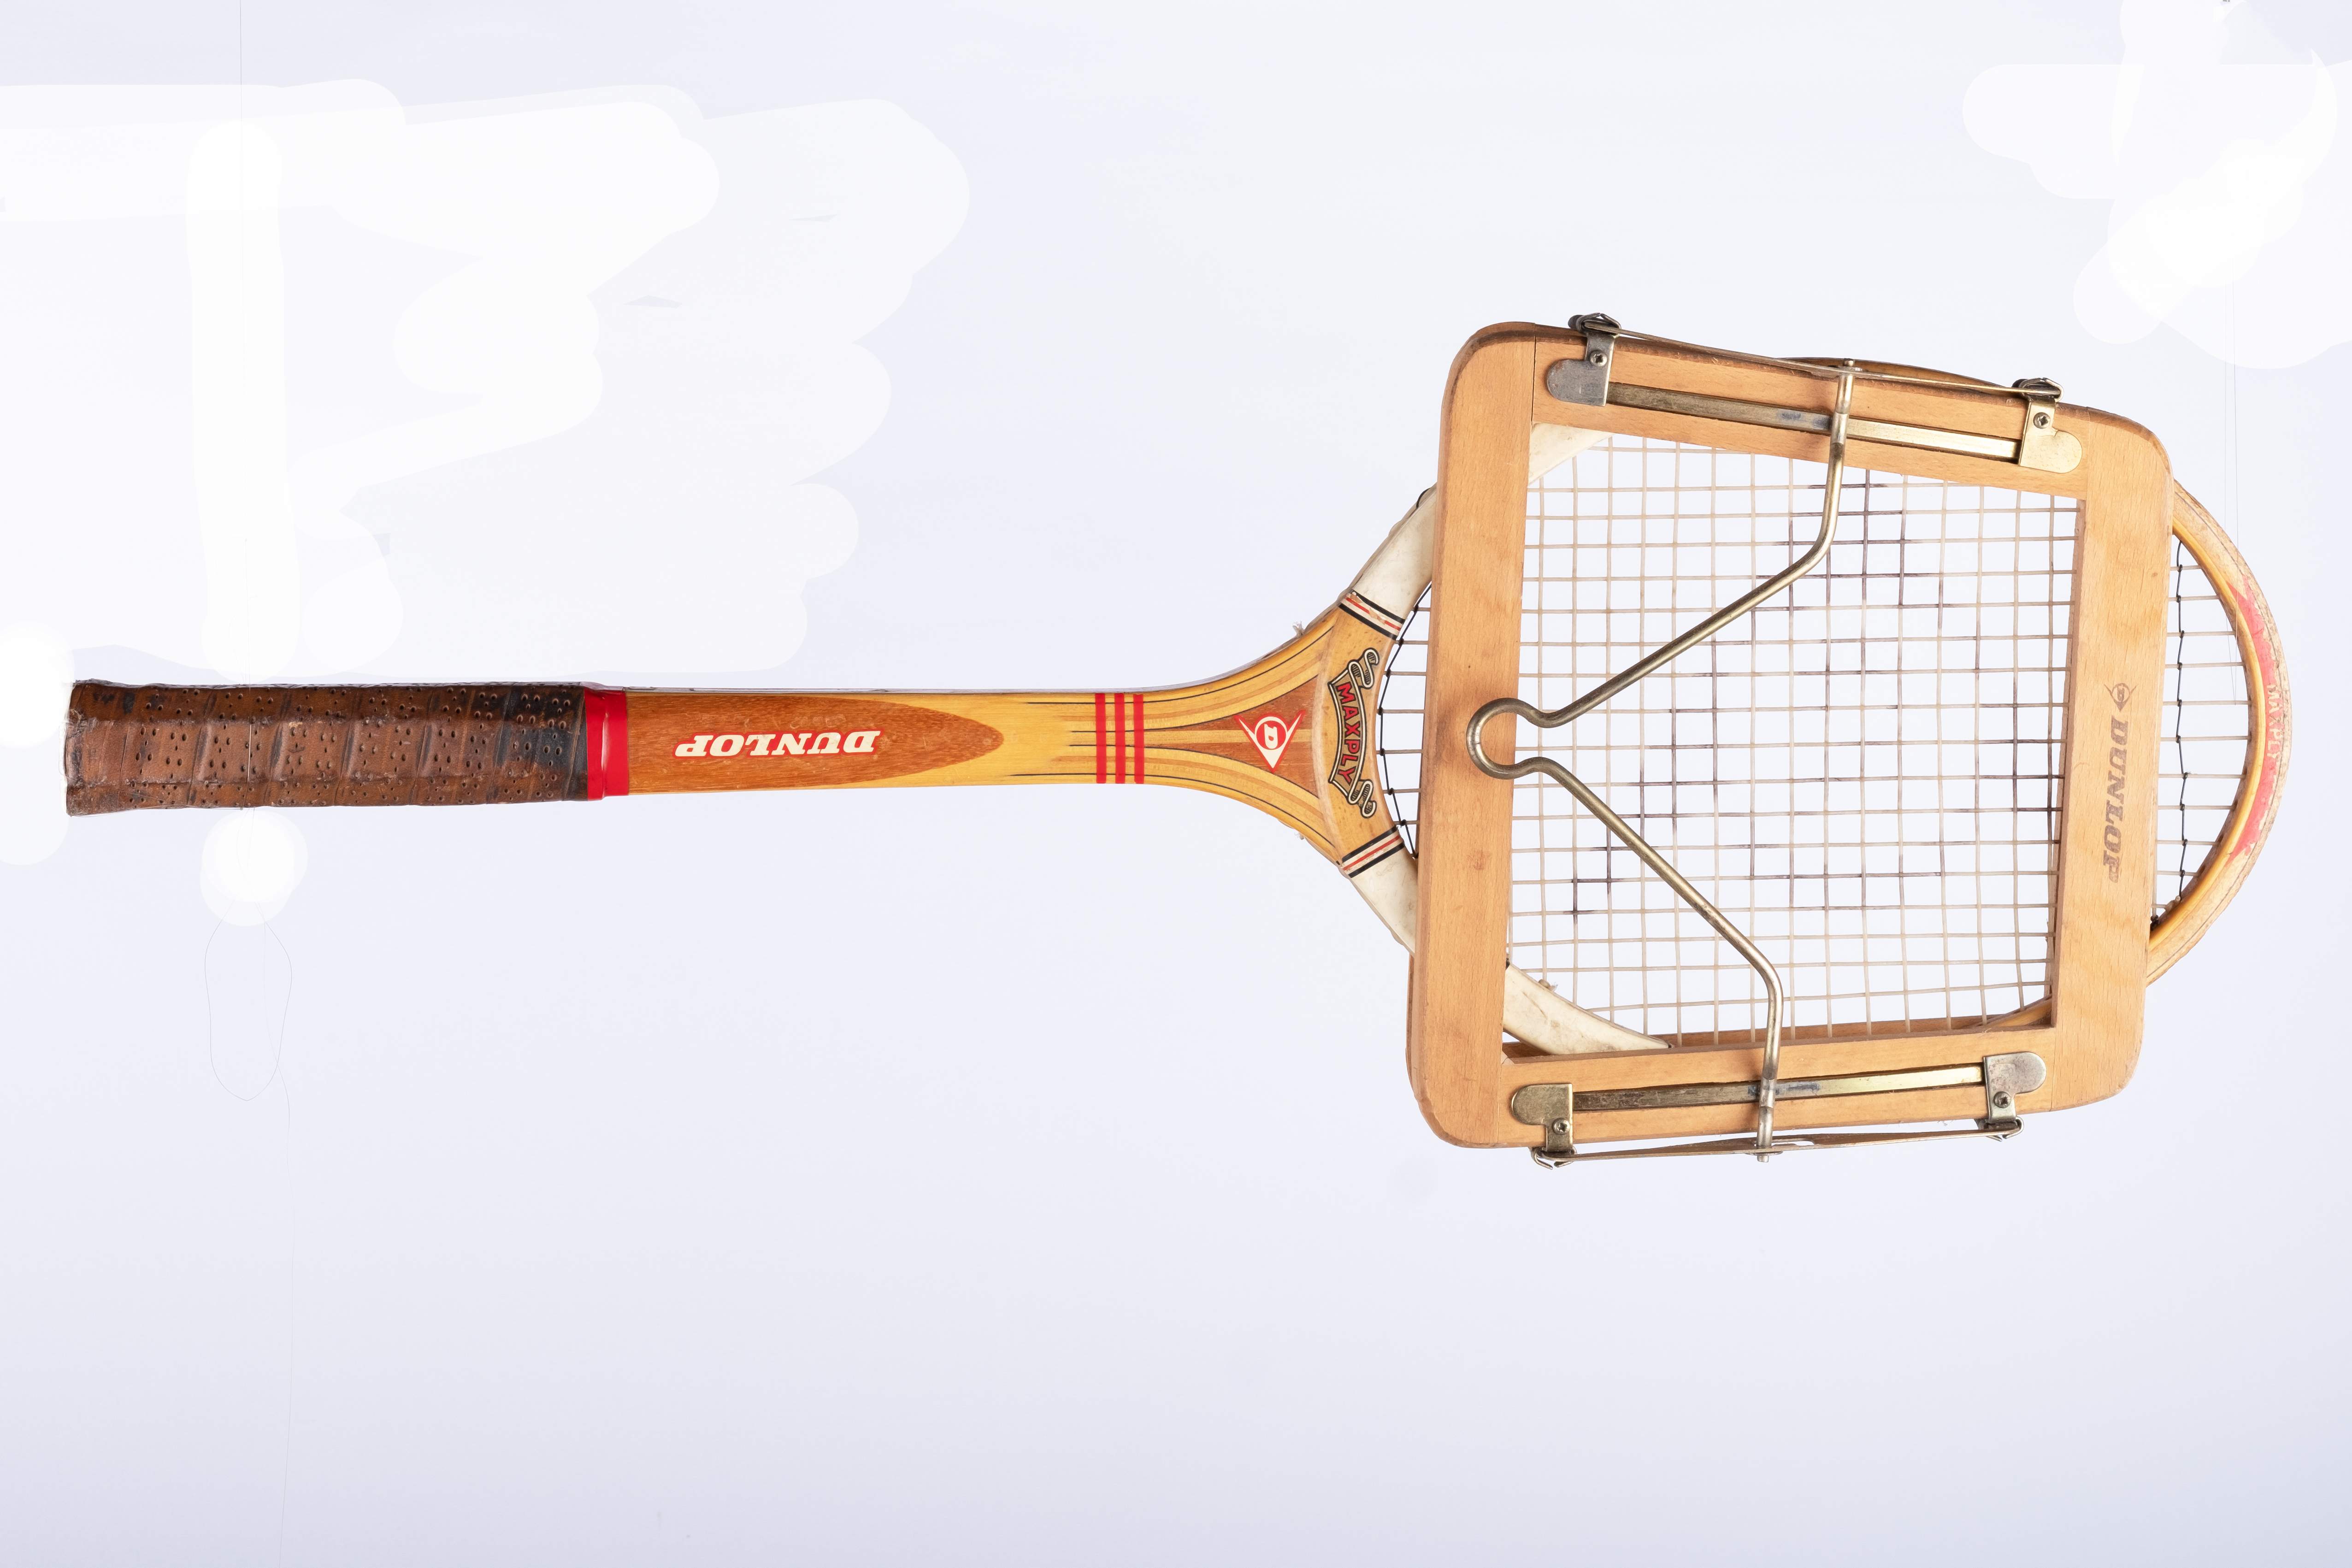 Dunlop Standard Maxply T6 Tennis Racket with Stretcher